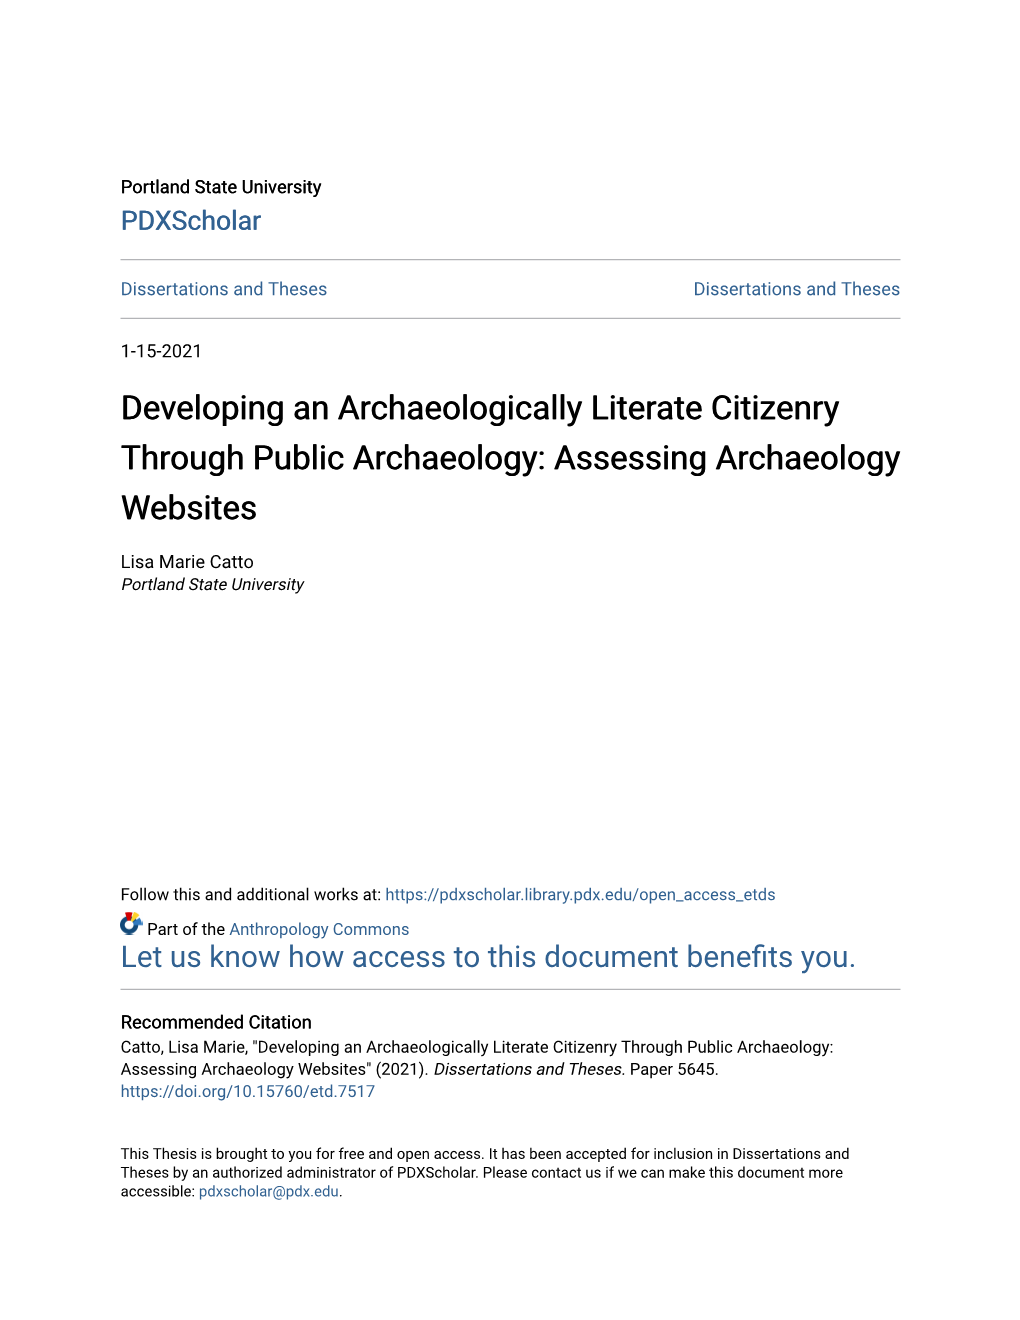 Assessing Archaeology Websites